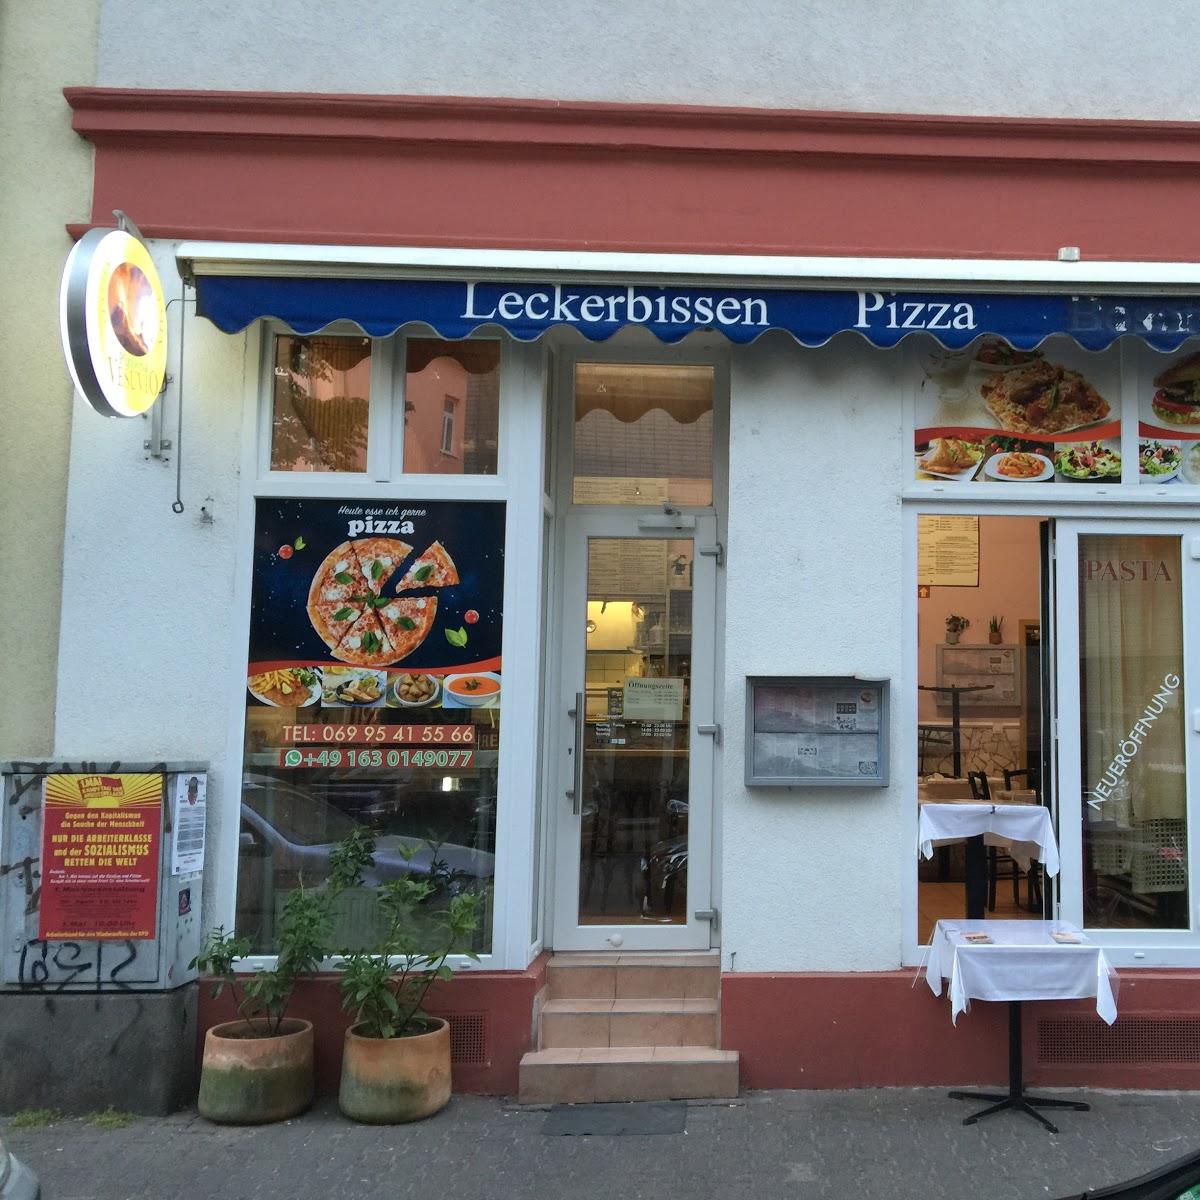 Restaurant "Pizzeria Vesuvio" in Frankfurt am Main